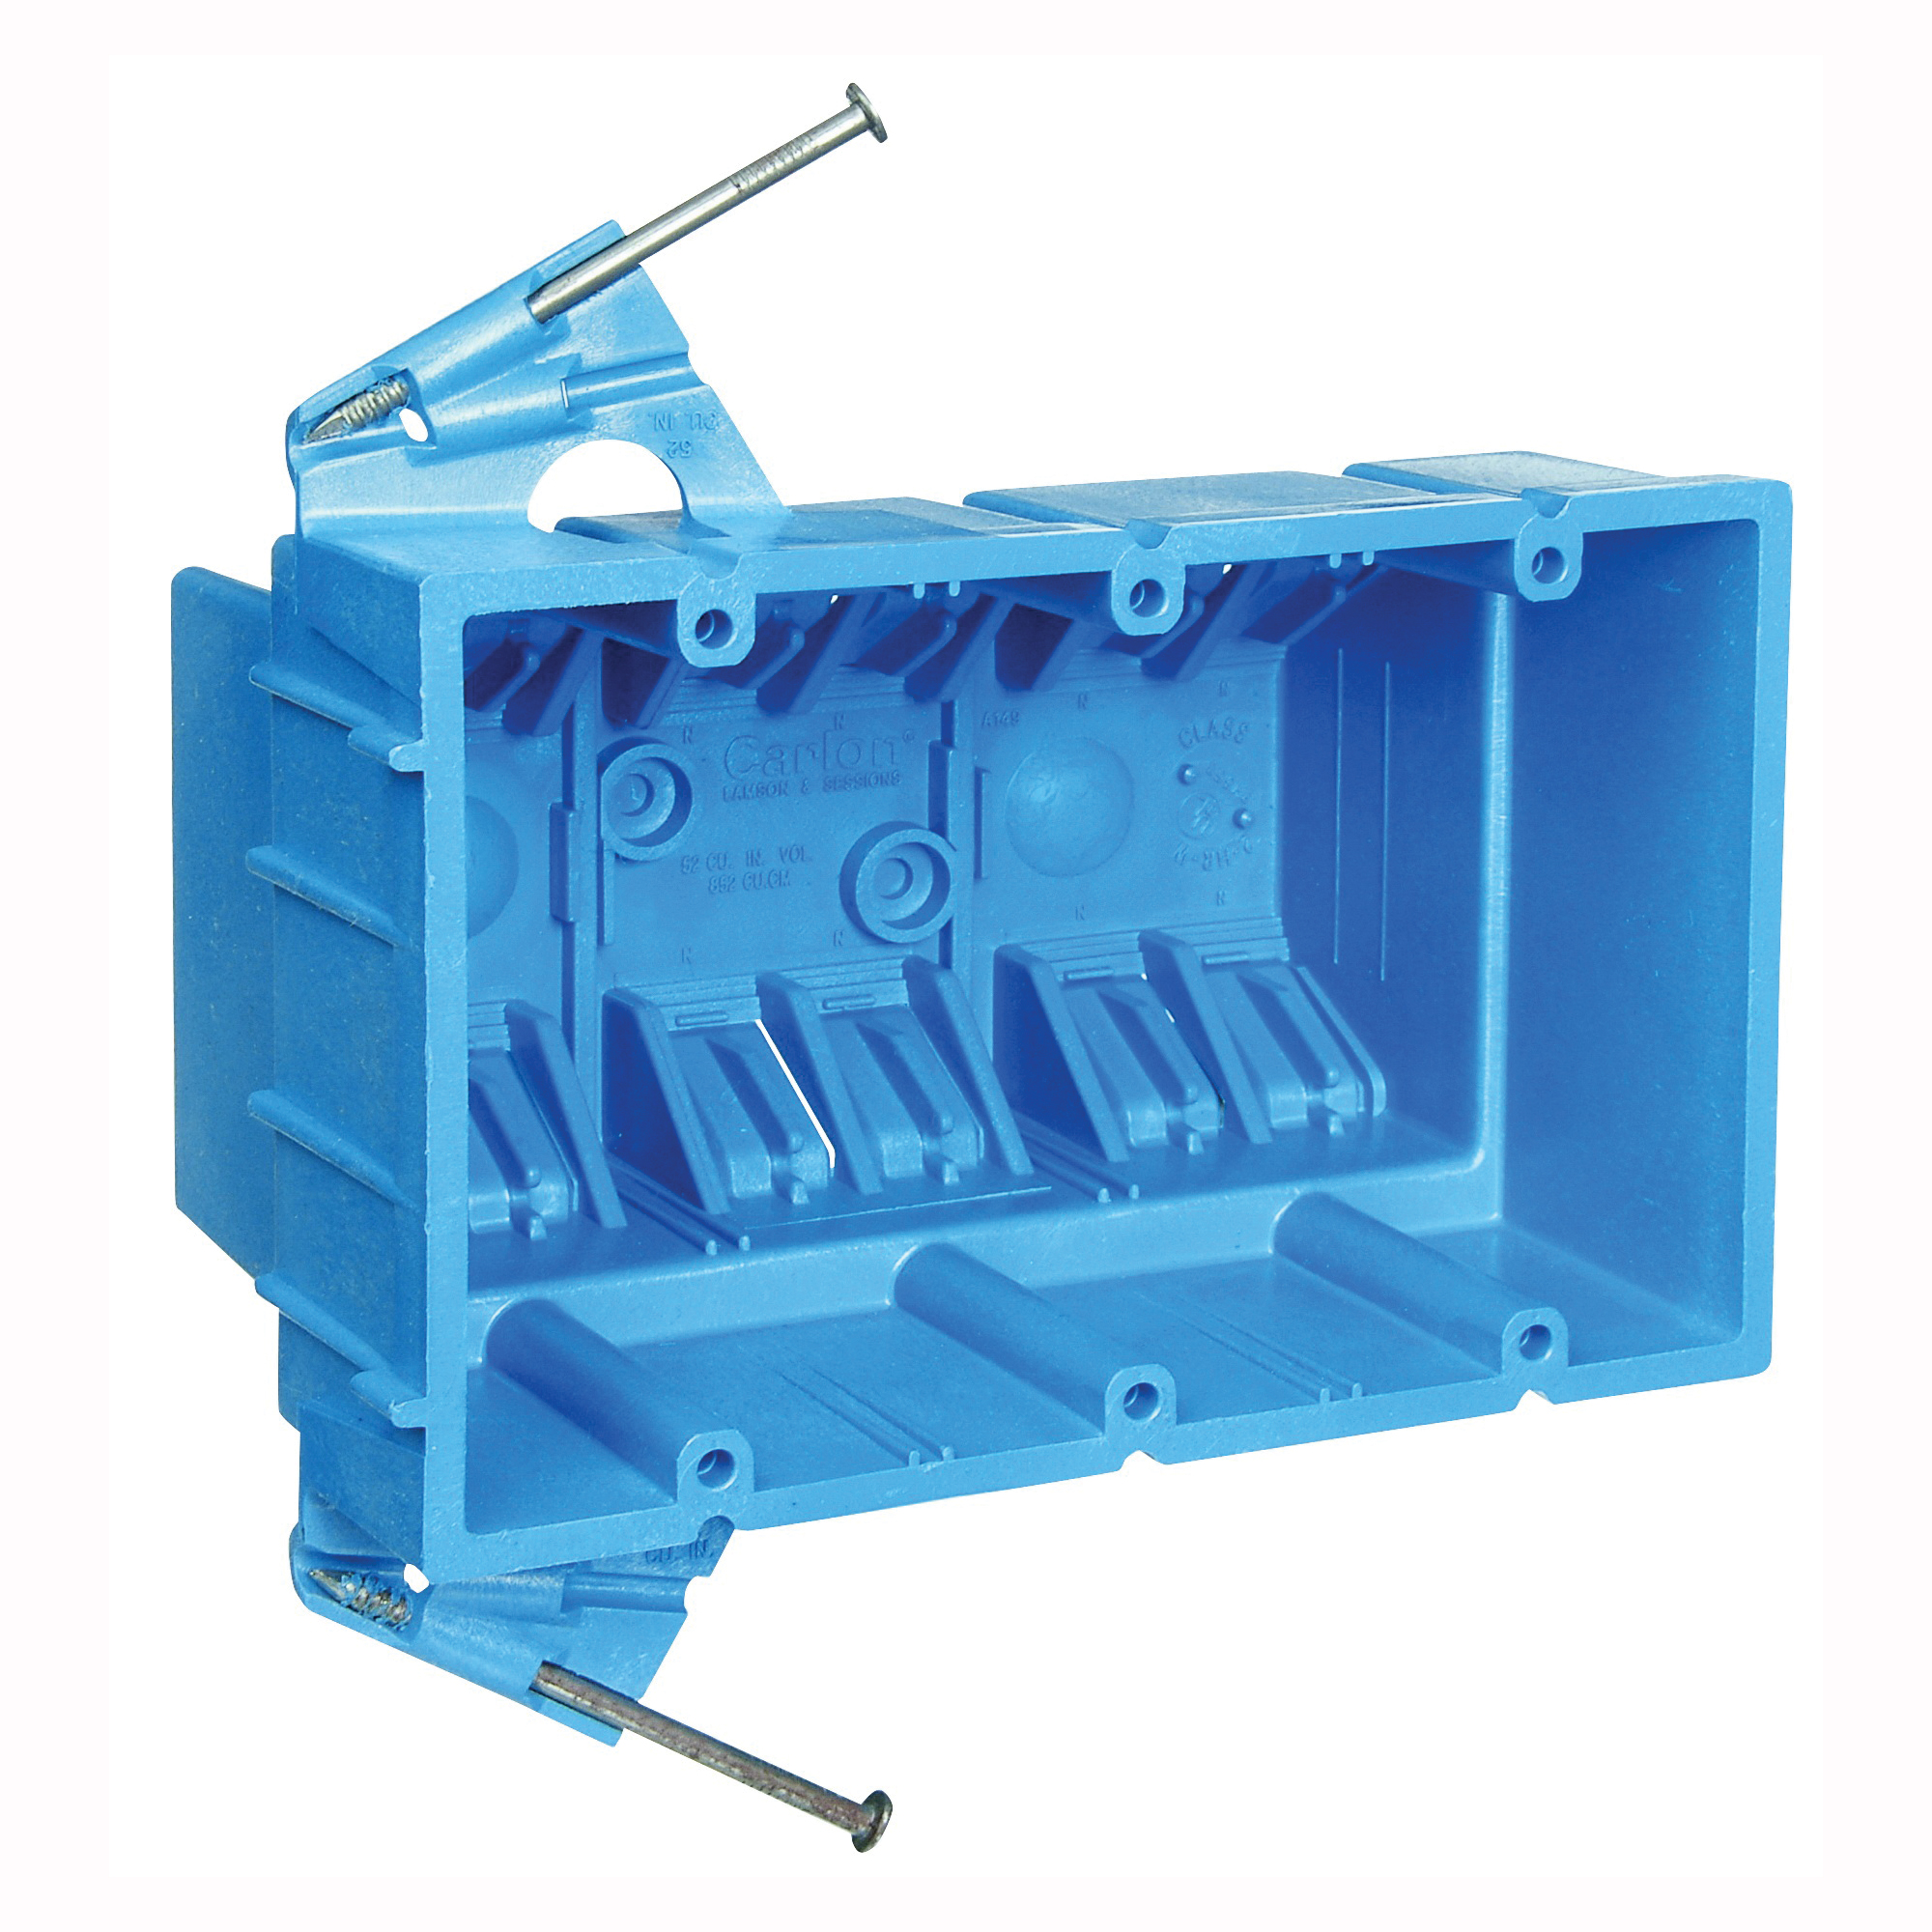 BH353A Outlet Box, 3 -Gang, PVC, Blue, Nail Mounting